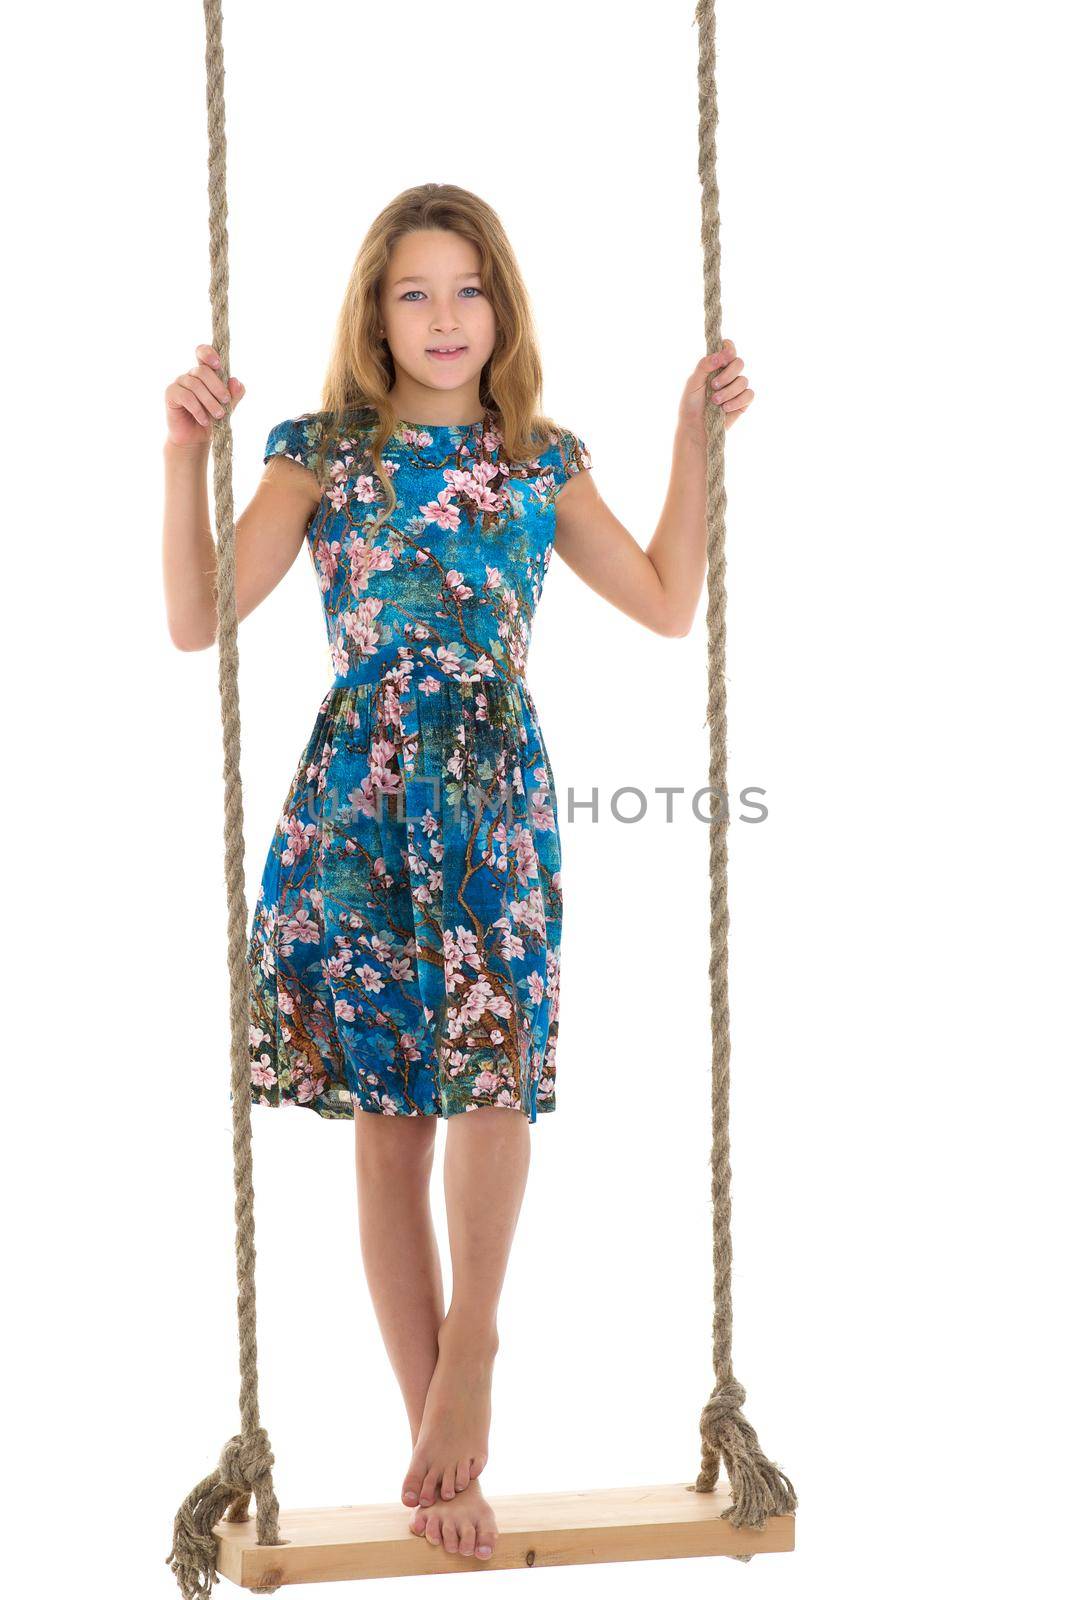 Girl standing on rope swing. Full length shot of long haired barefoot girl standing swinging on isolated white background. Portrait of happy preteen child